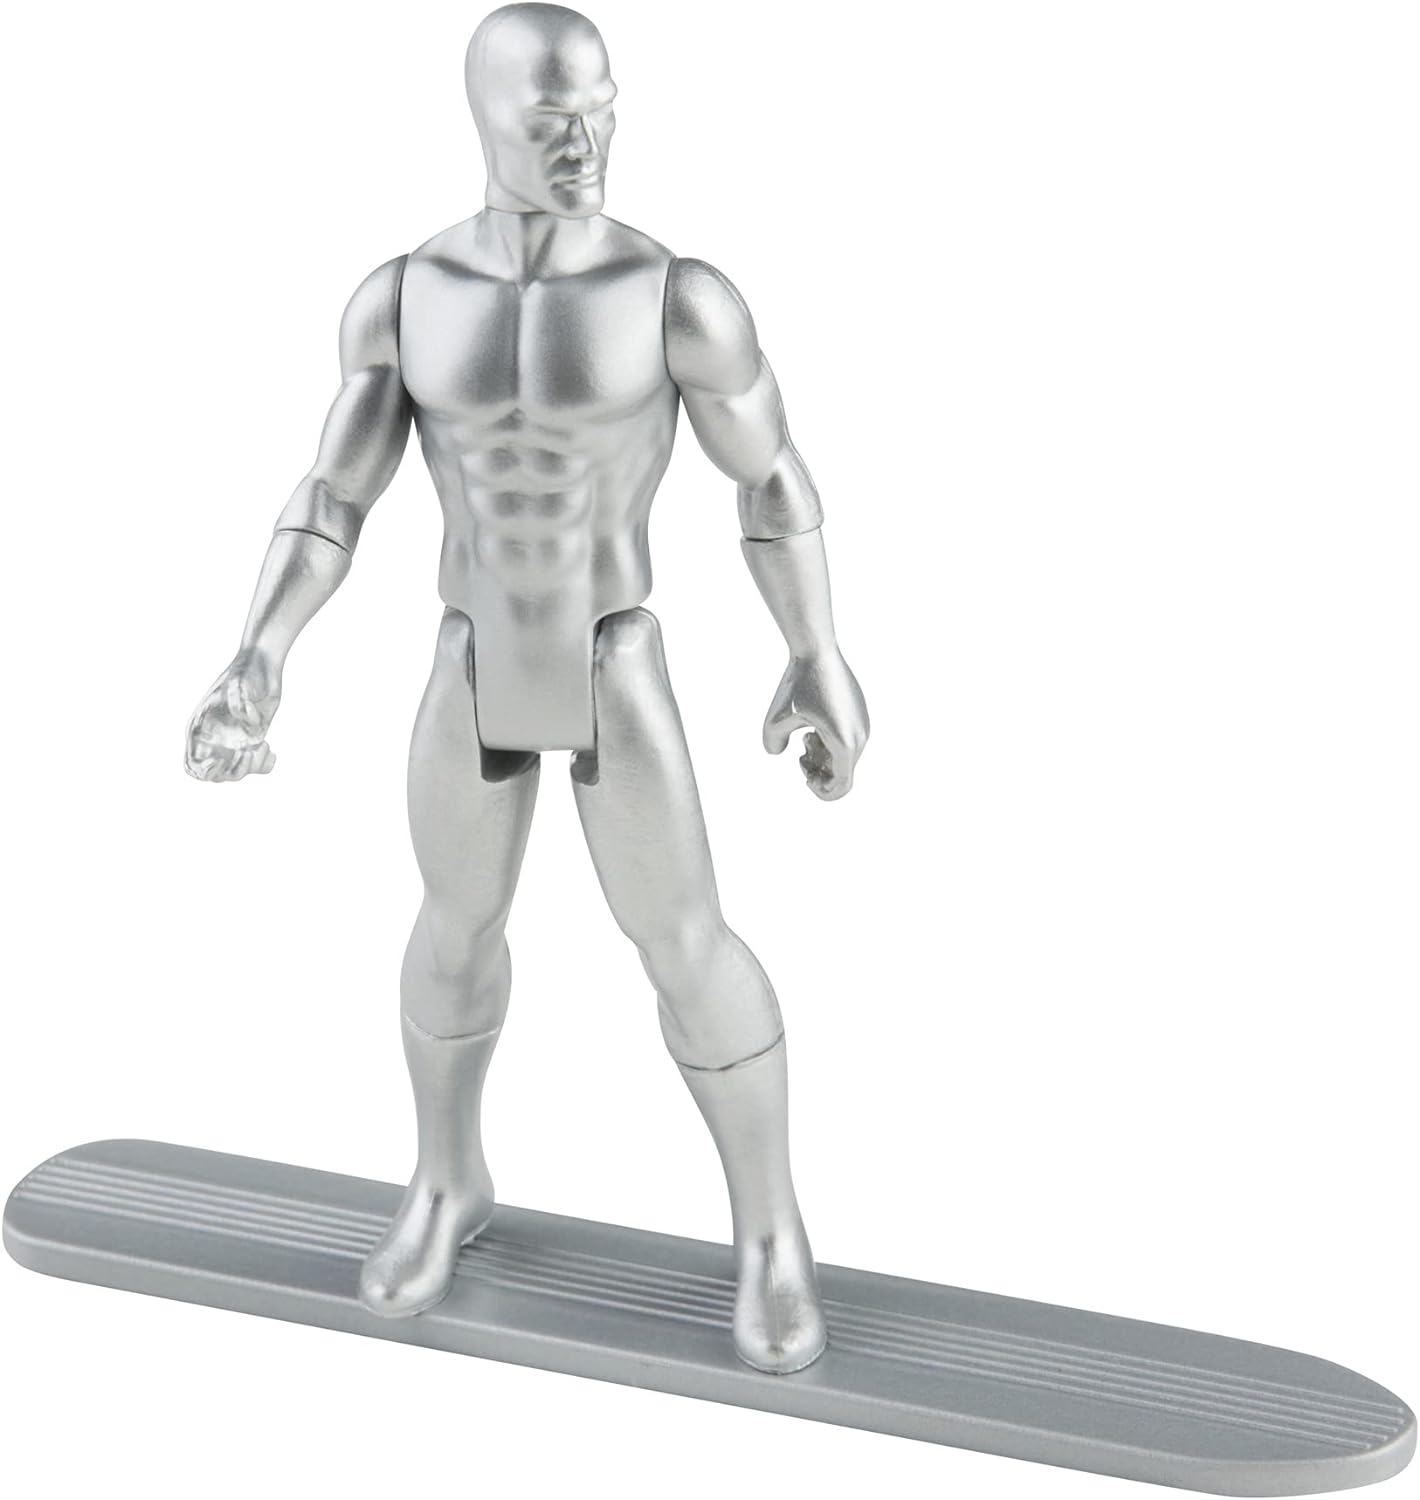 Hasbro Marvel Legends Series Silver Surfer 6 inch Action Figure for sale online 